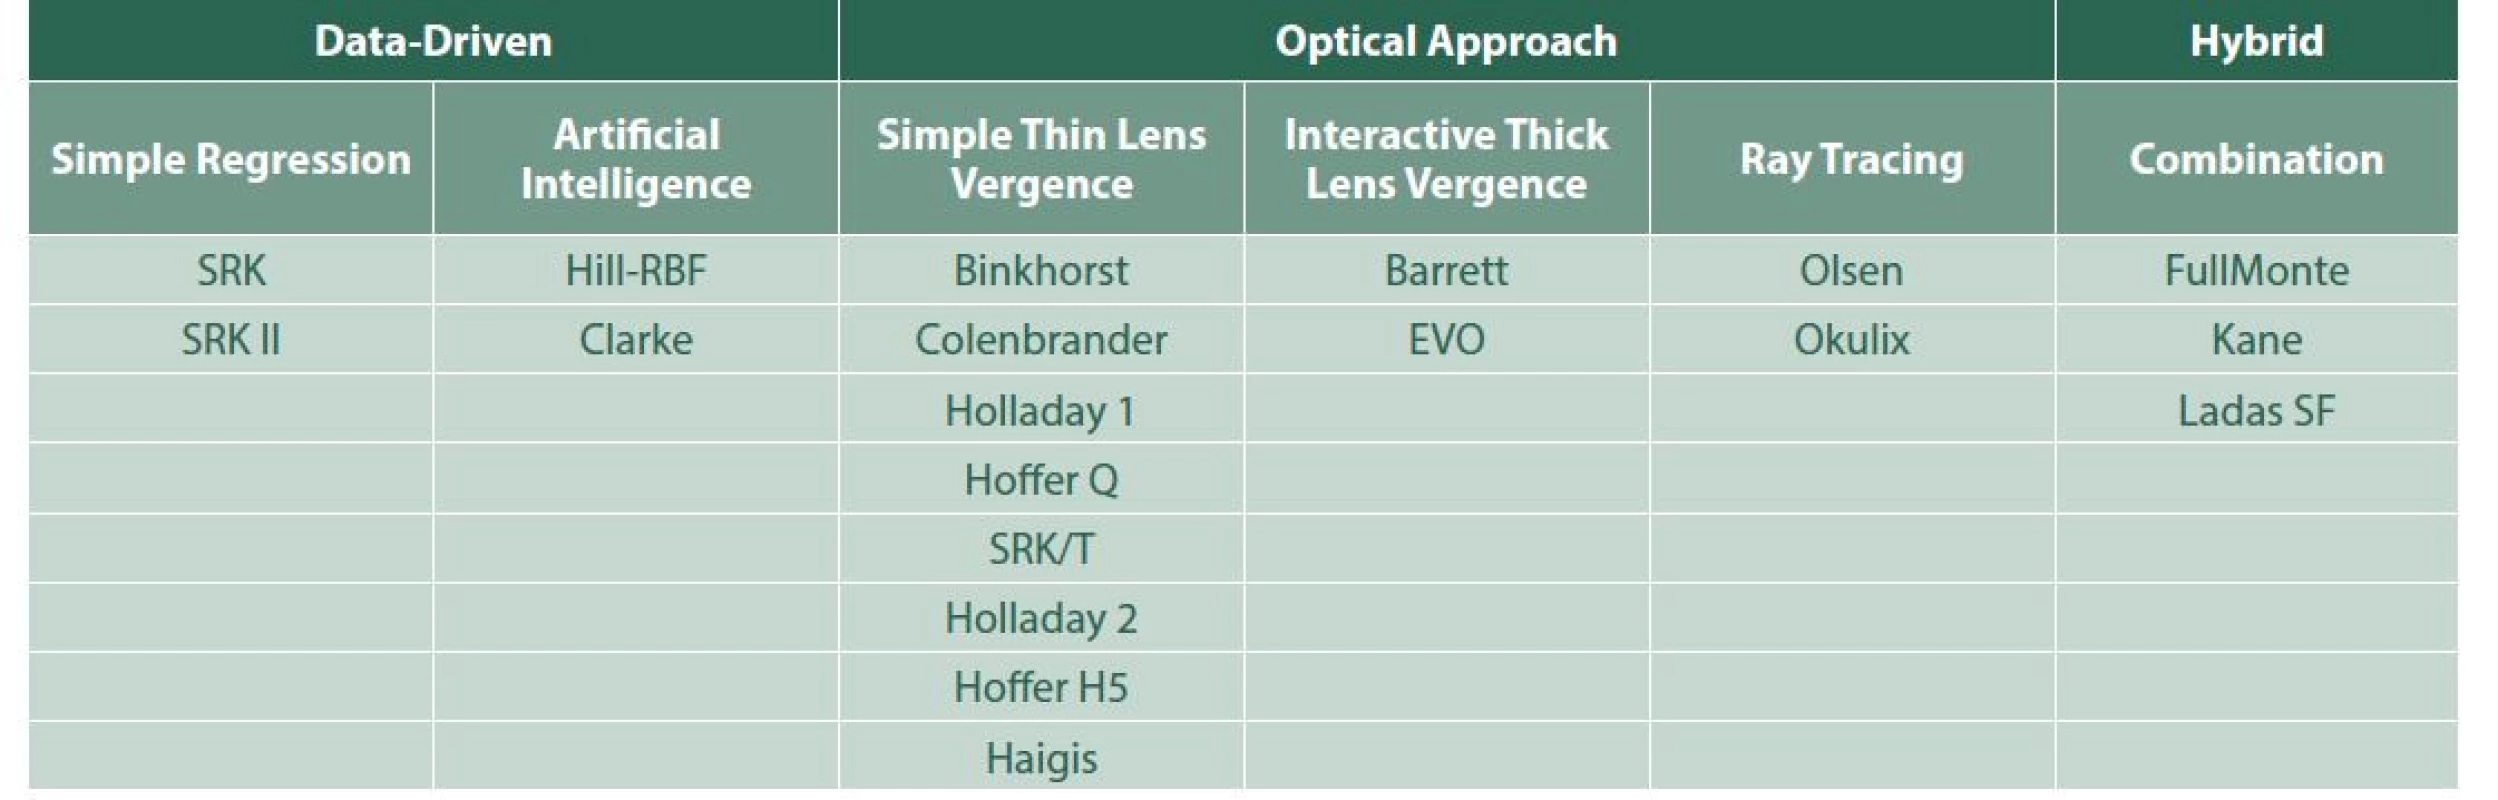 Intraocular lens power calculation formulas